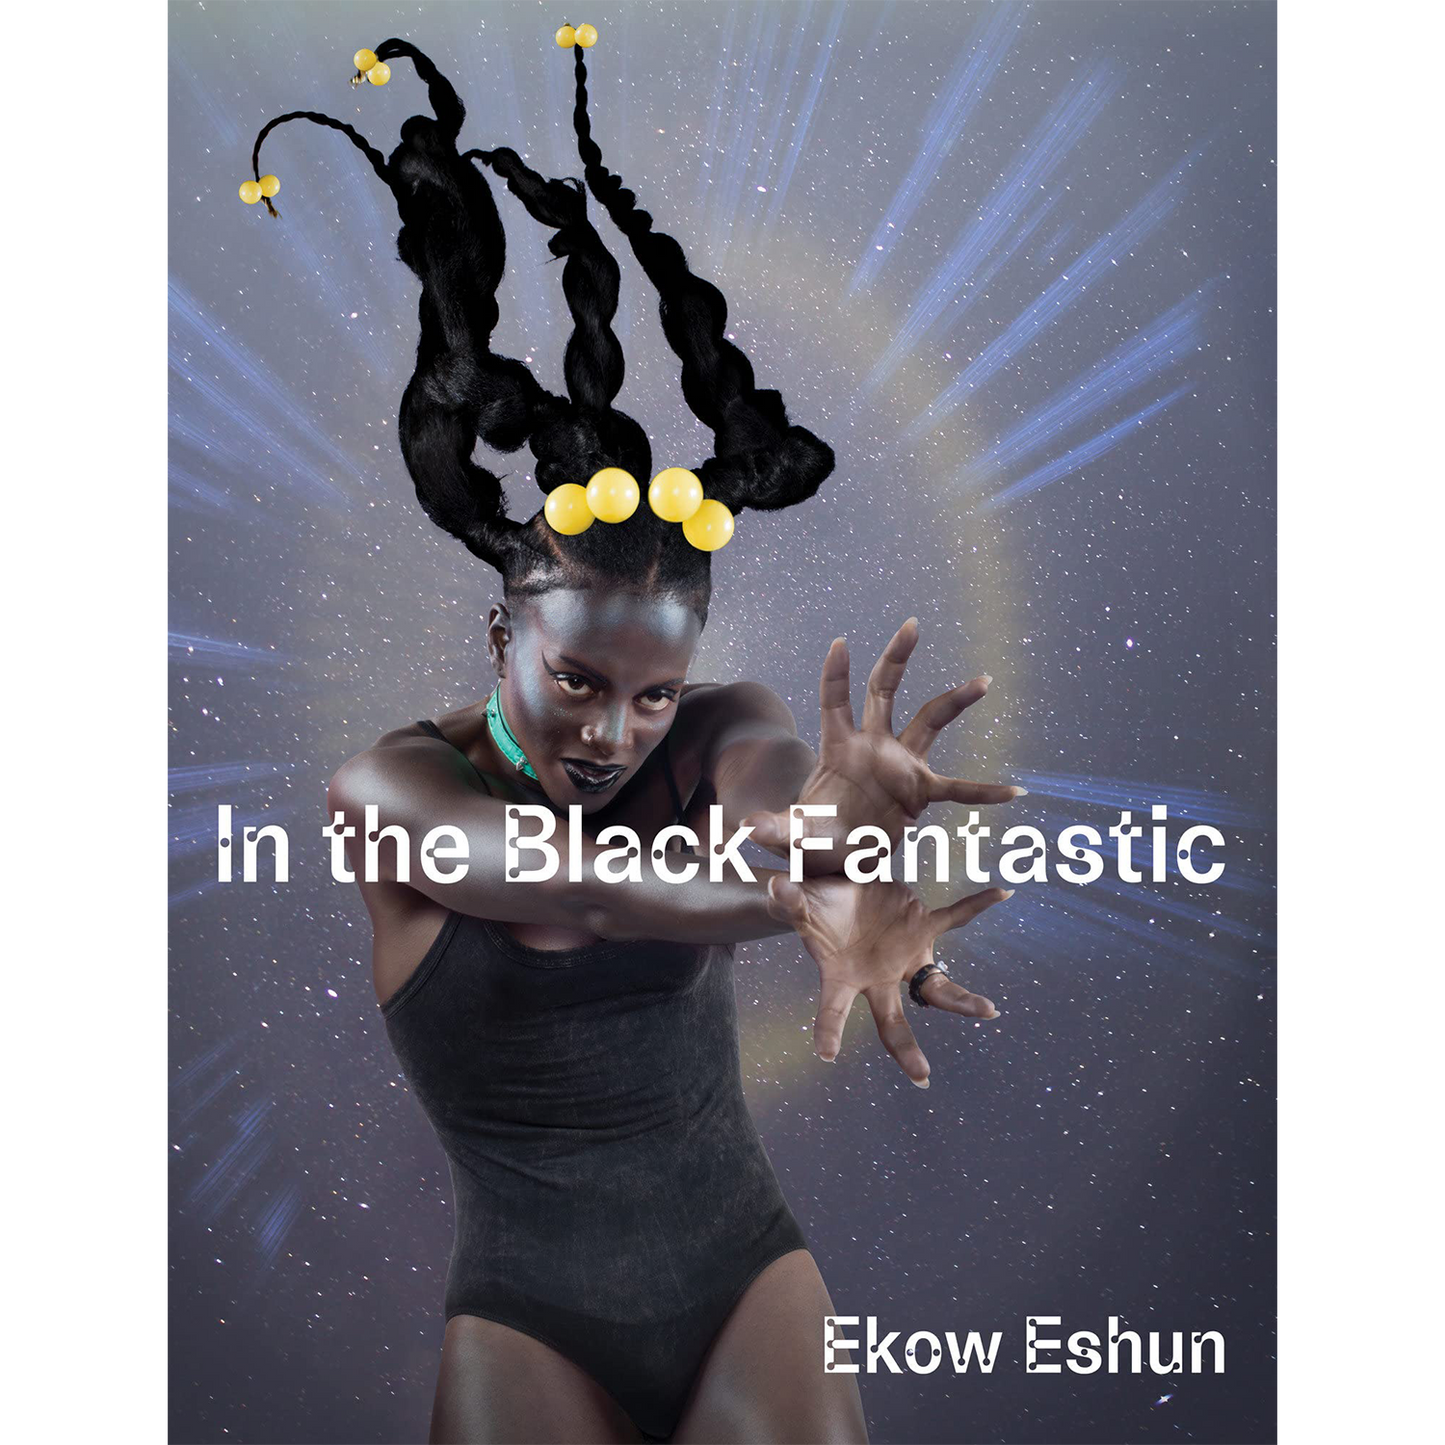 In the Black Fantastic by Ekow Eshun